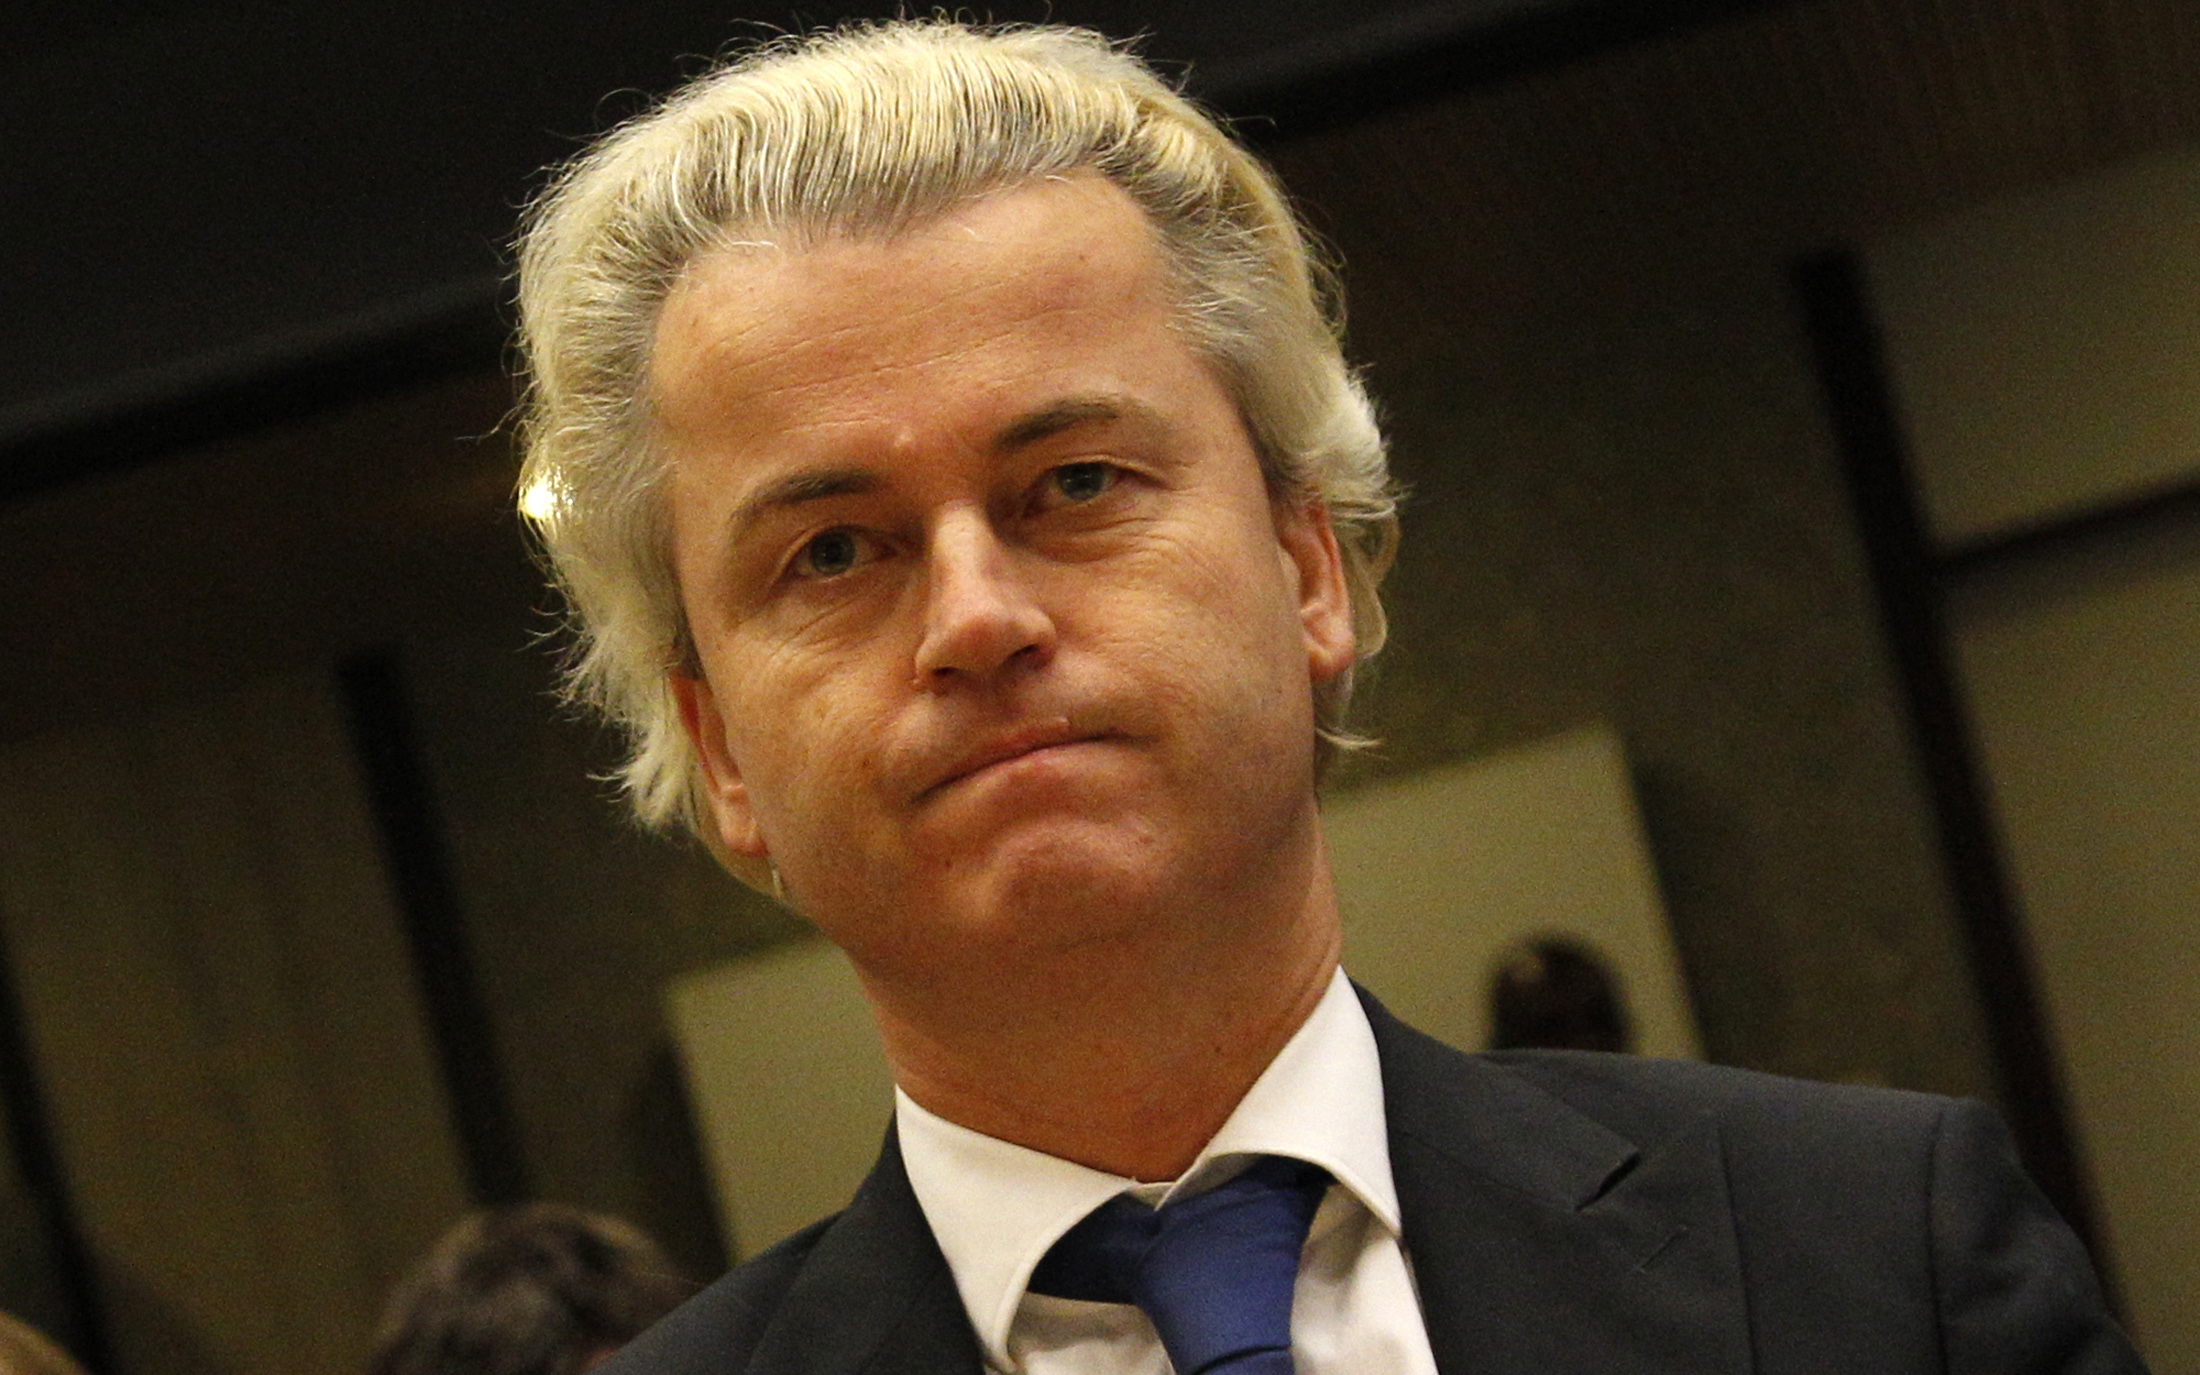 Geert Wilders, Islamofobi, Främlingsfientlighet, Rasism, Domstol, Hets mot folkgrupp